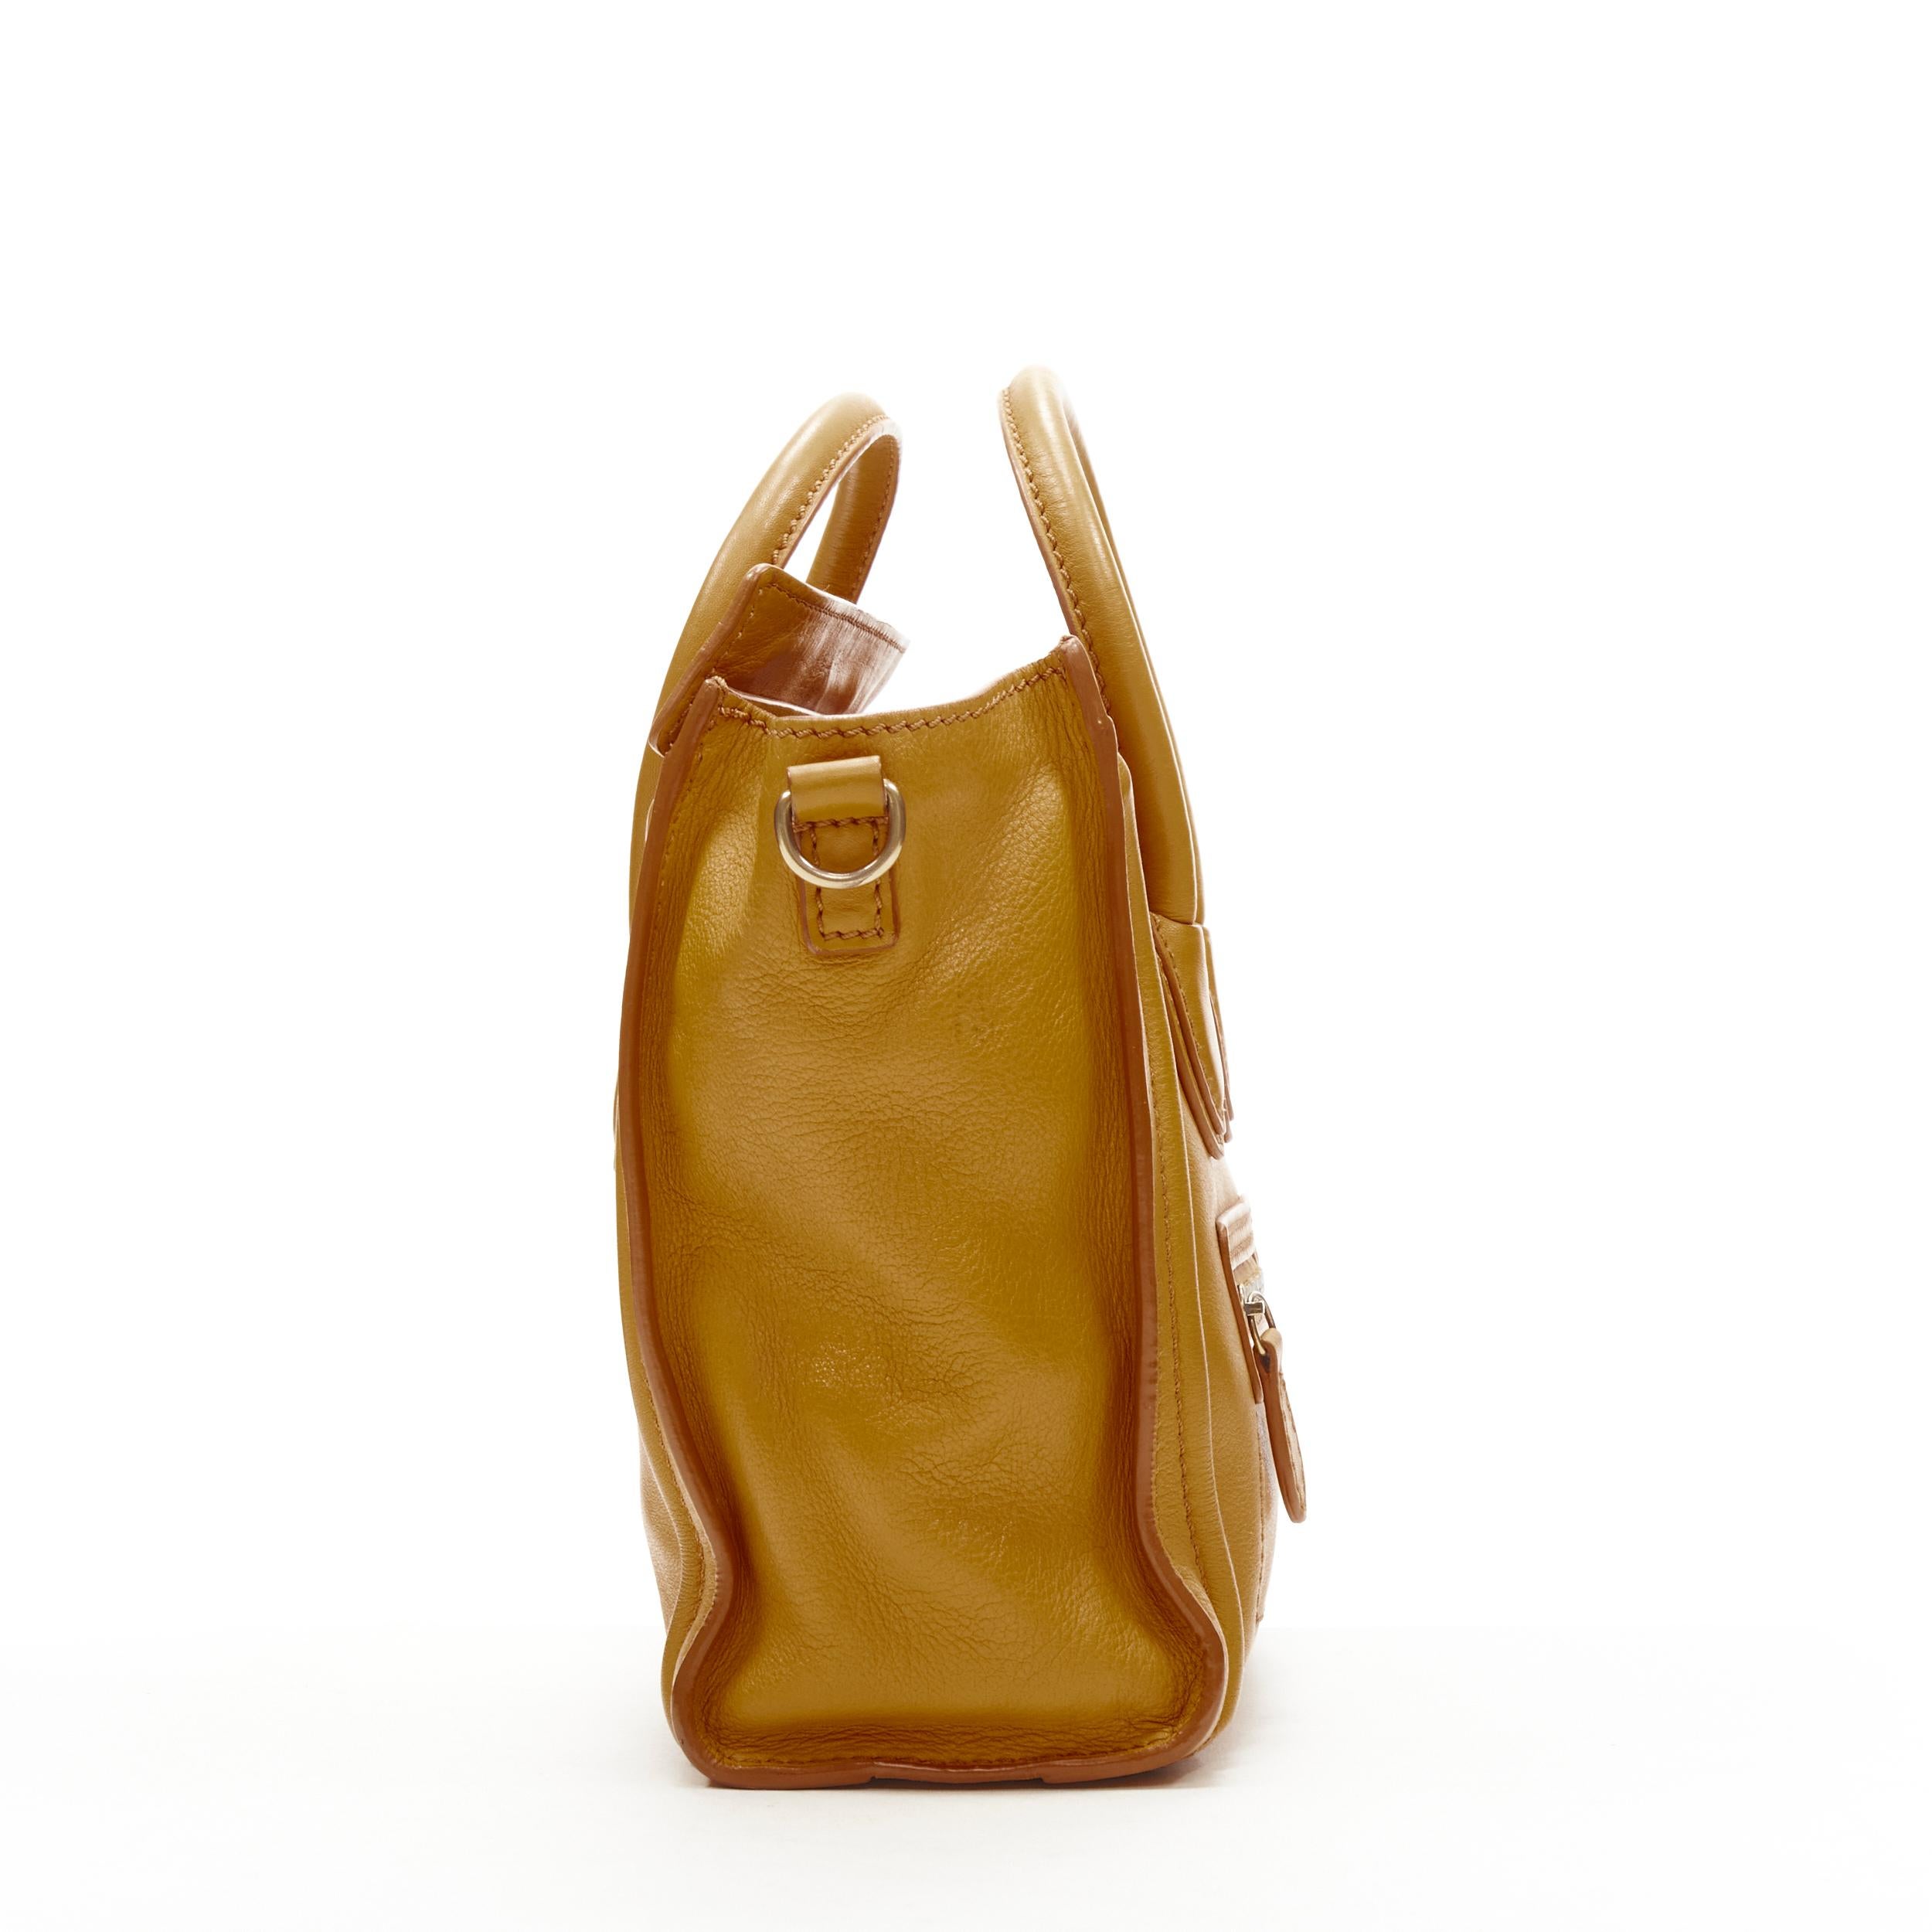 Women's OLD CELINE Phoebe Philo Nano Luggage mustard yellow crossbody shopper tote bag